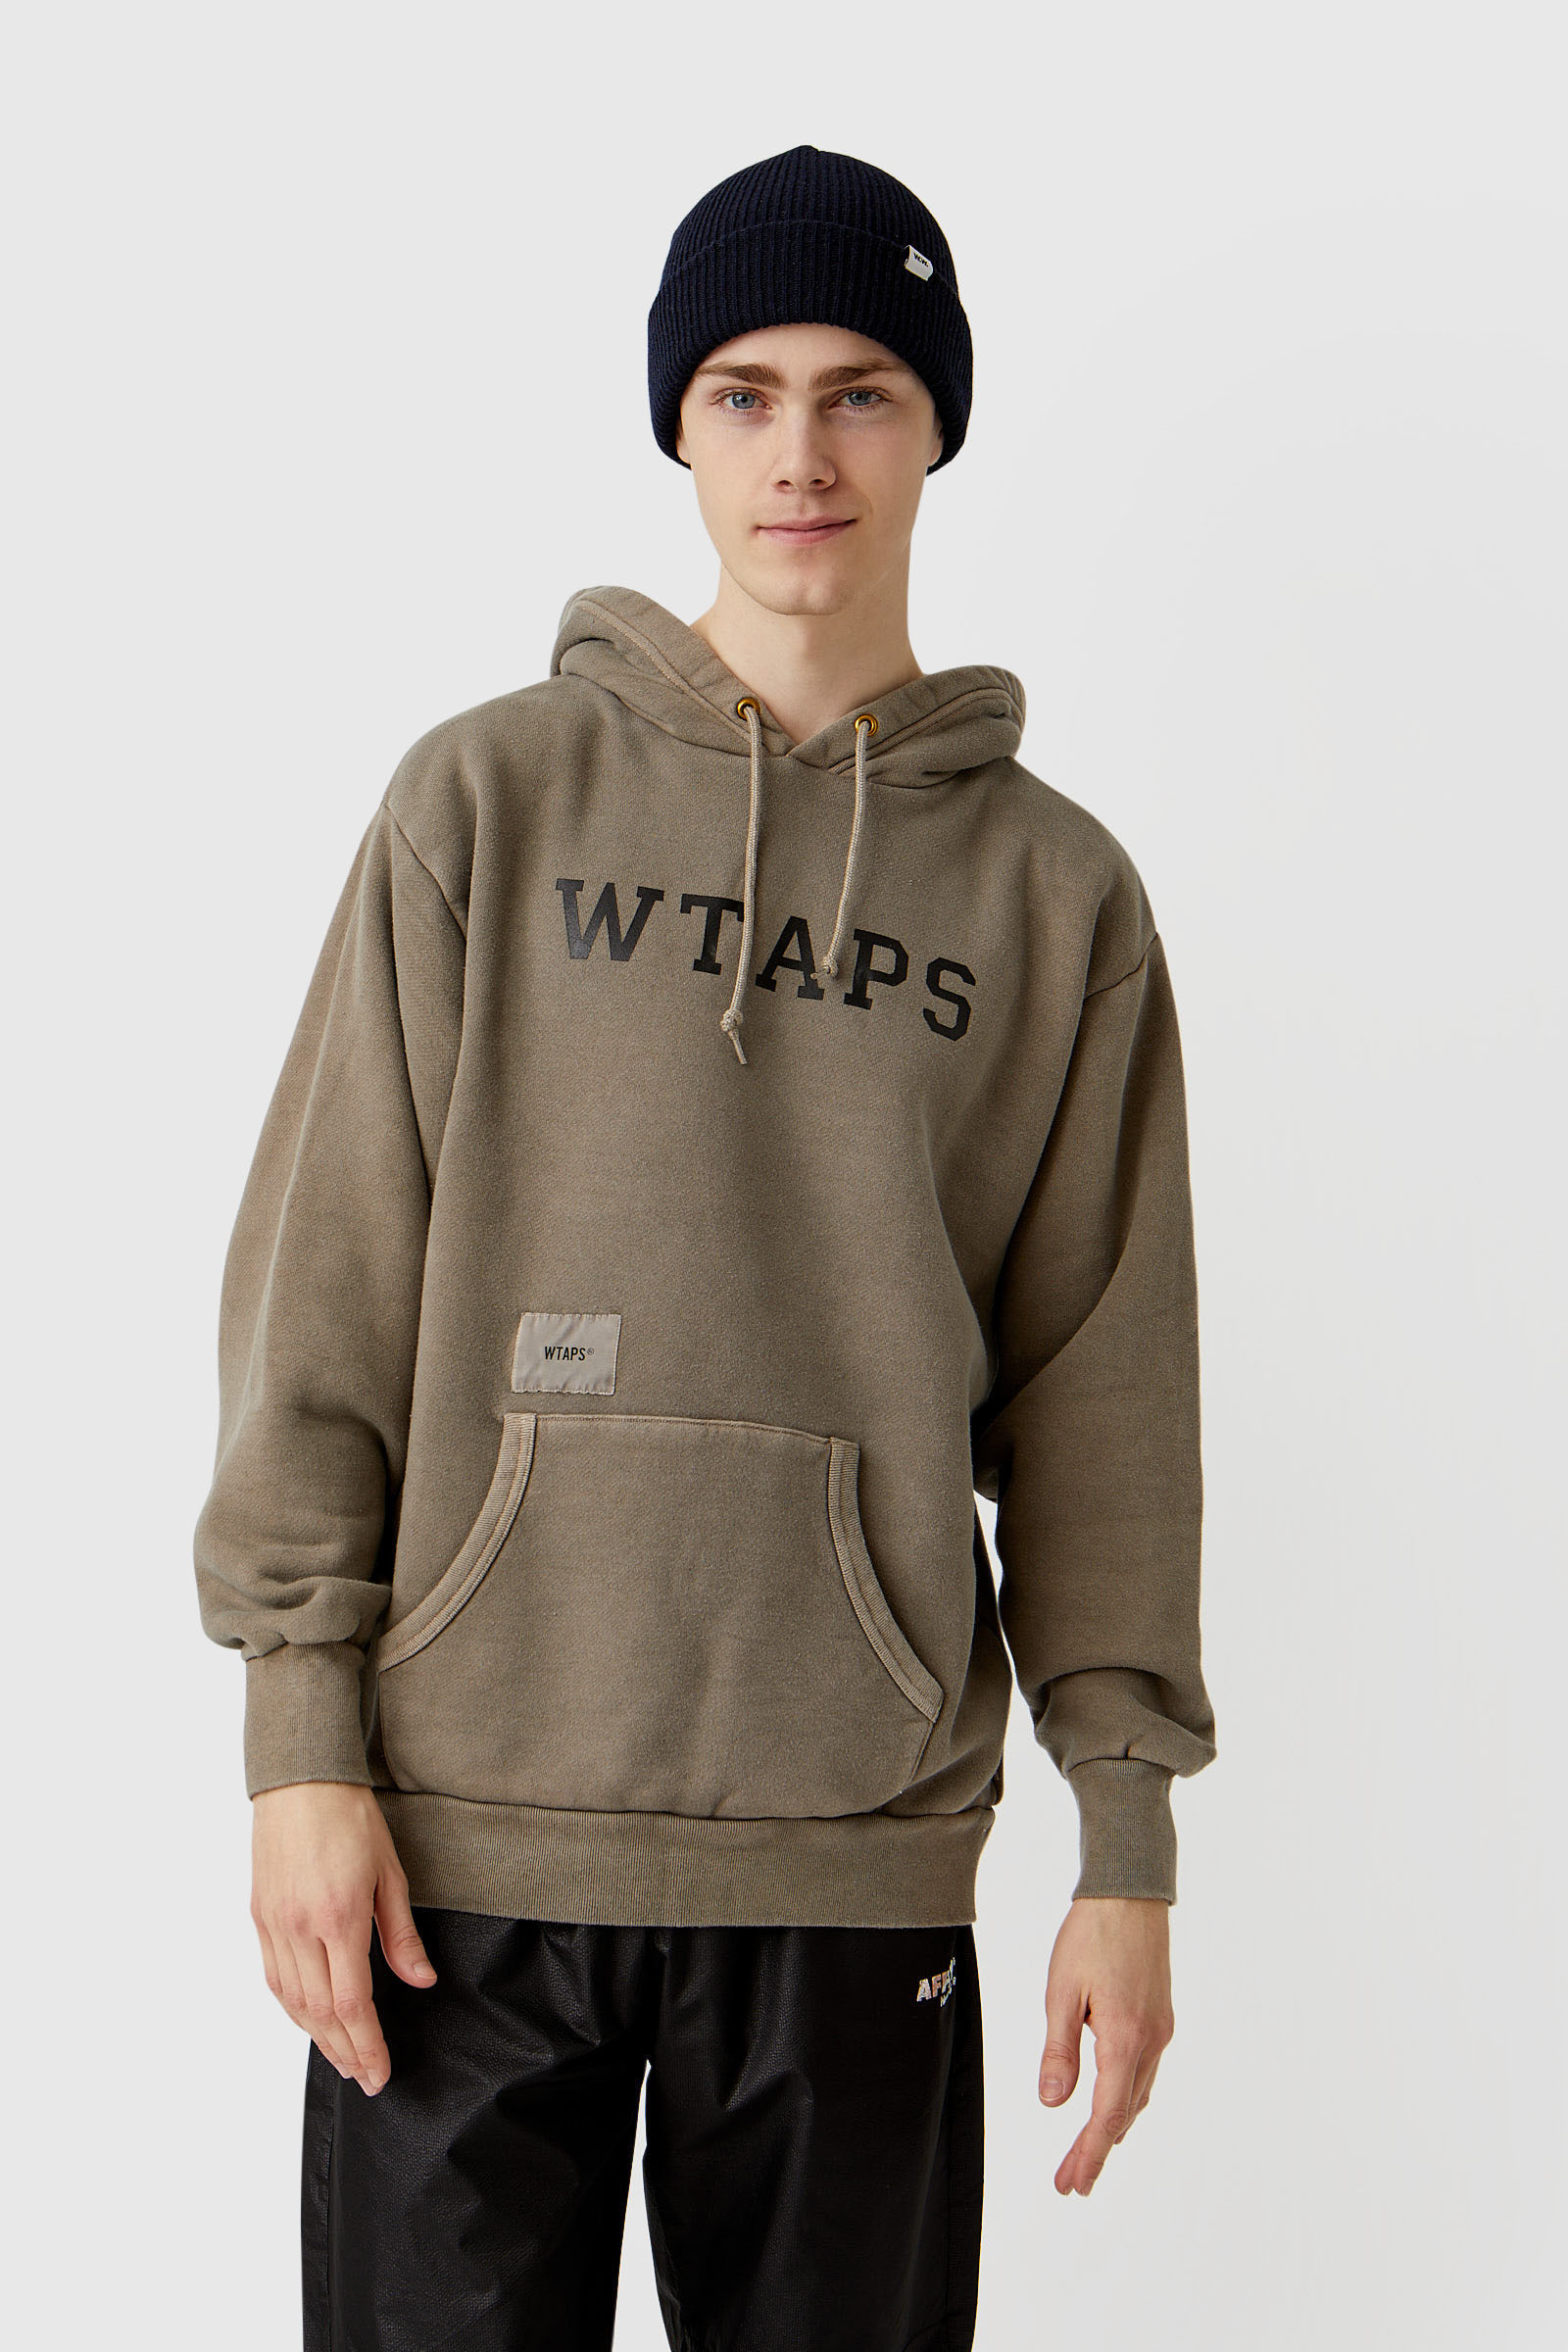 wtaps college design hooded